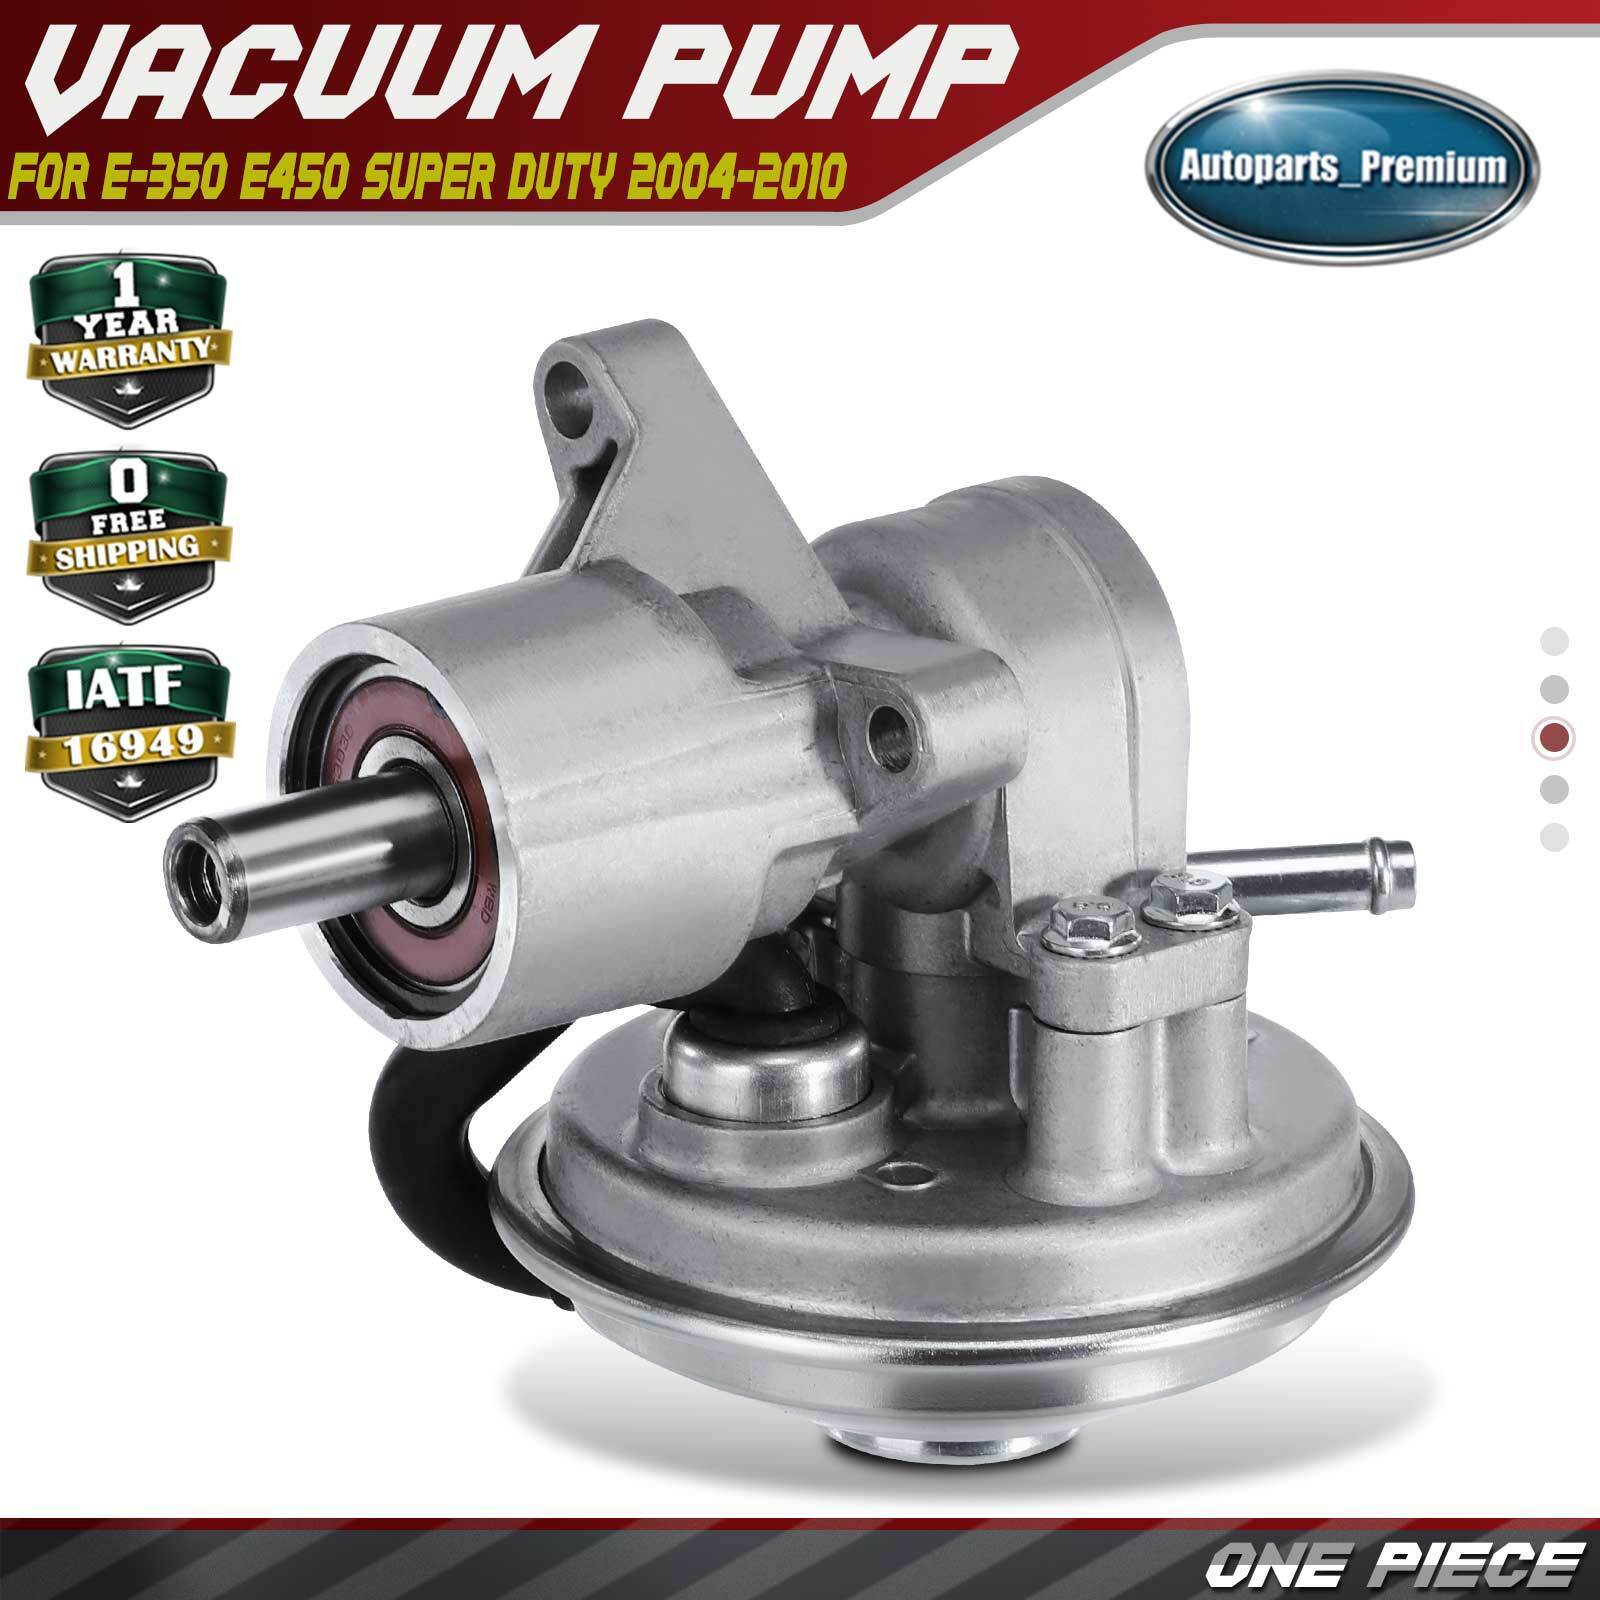 Mechanical Vacuum Pump for Ford E-350 E450 Super Duty 2004-2010 E-350 Club Wagon